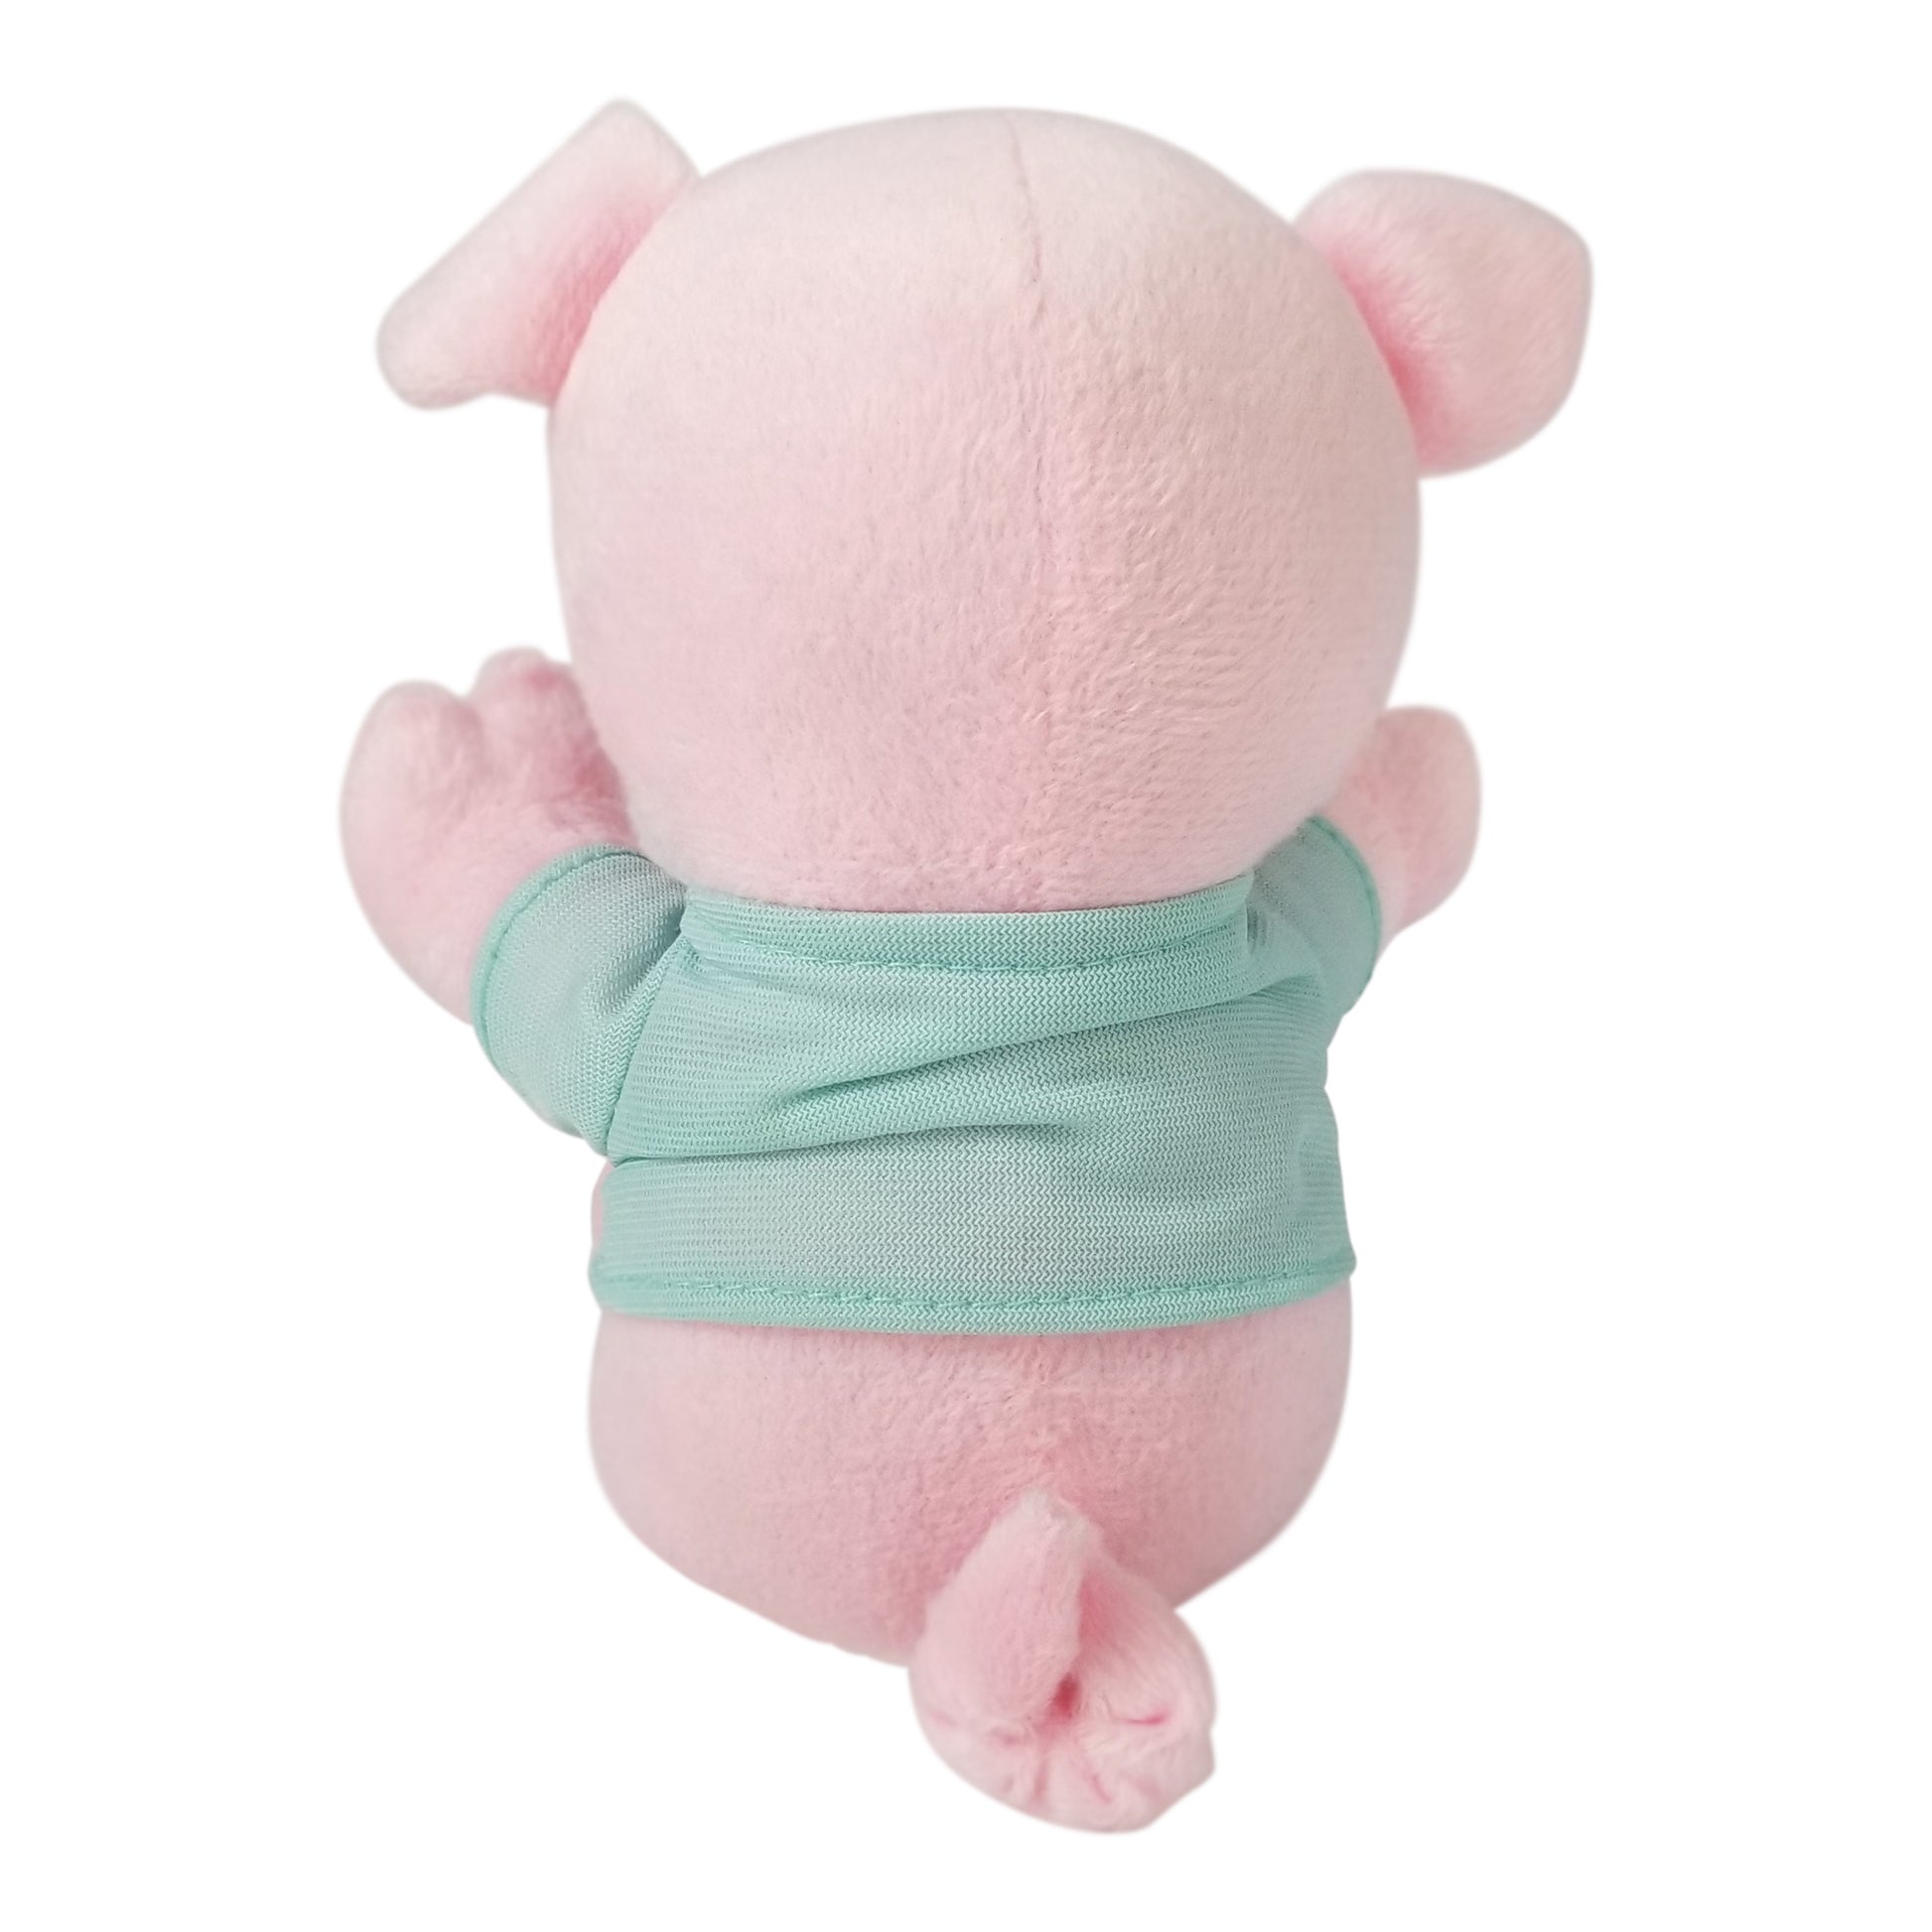 Stuffed Pig Plush Toy 6"